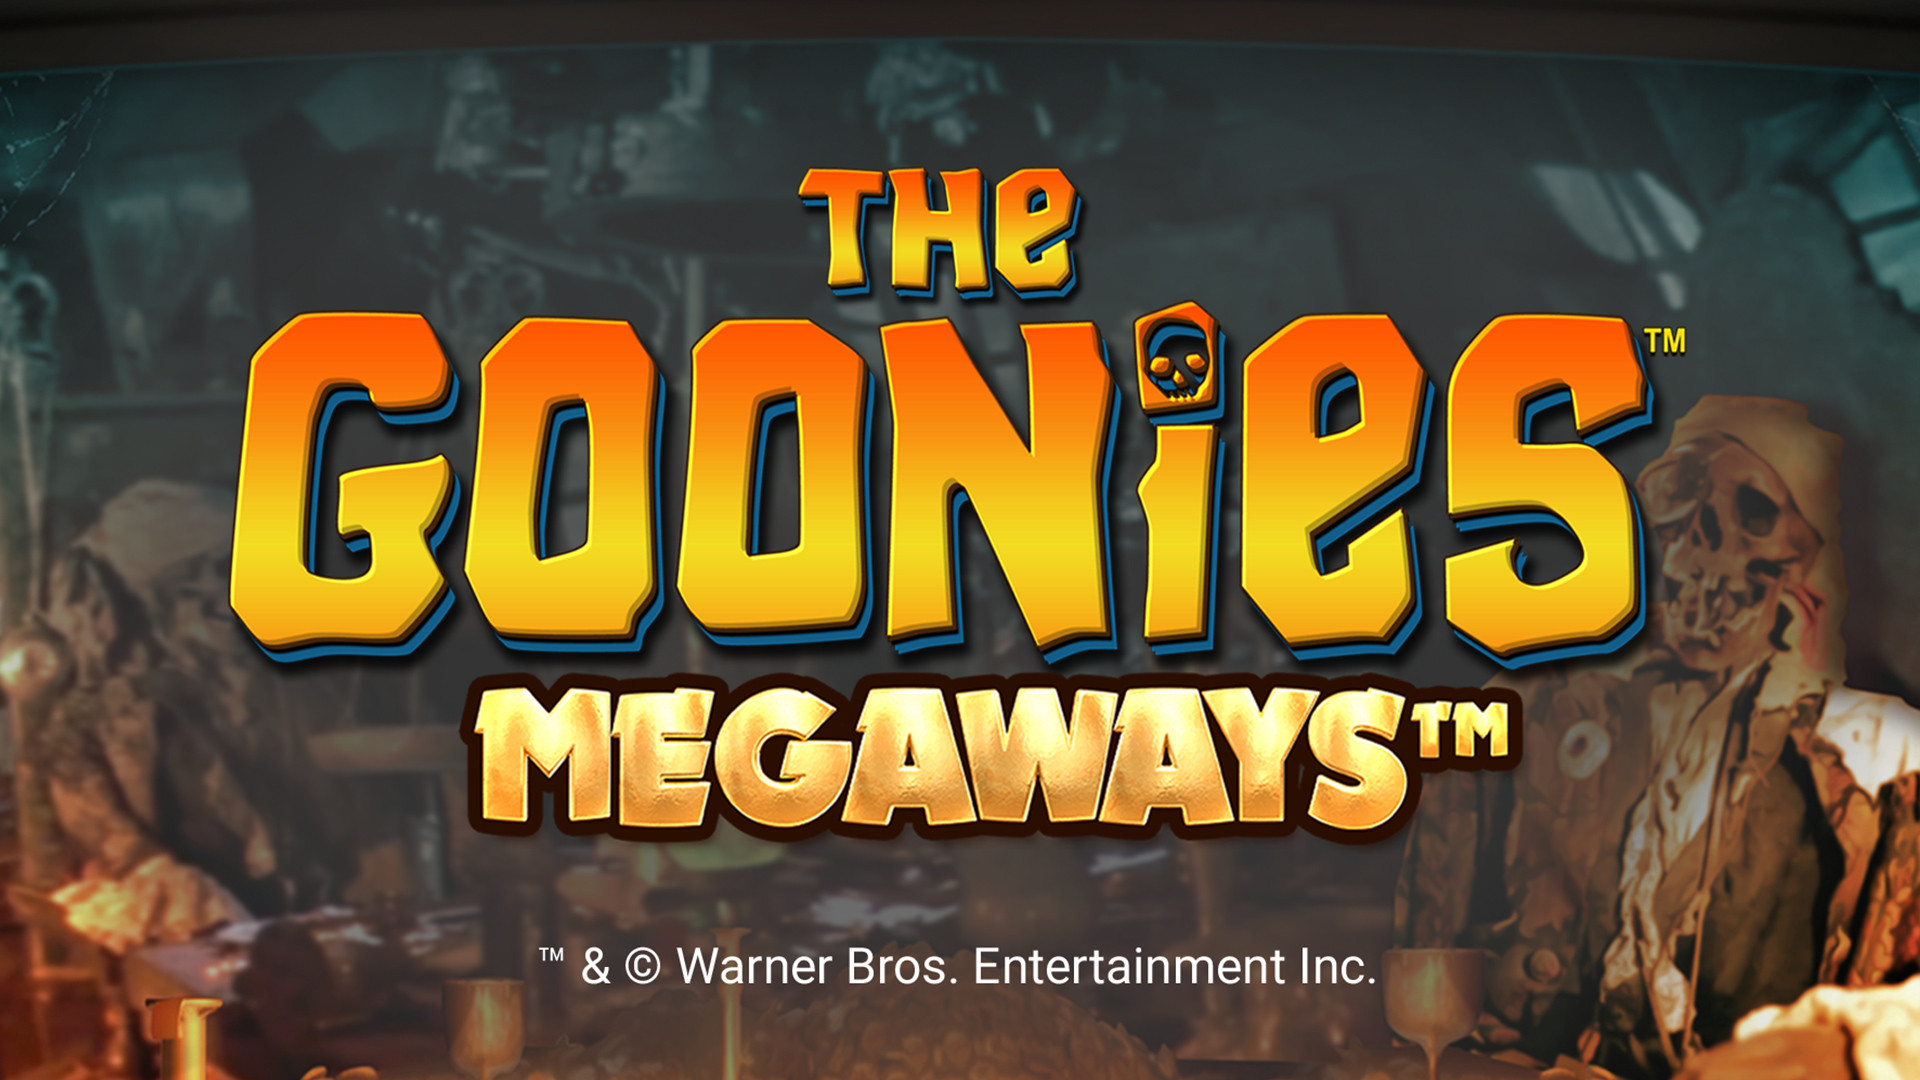 The Goonies MEGAWAYS